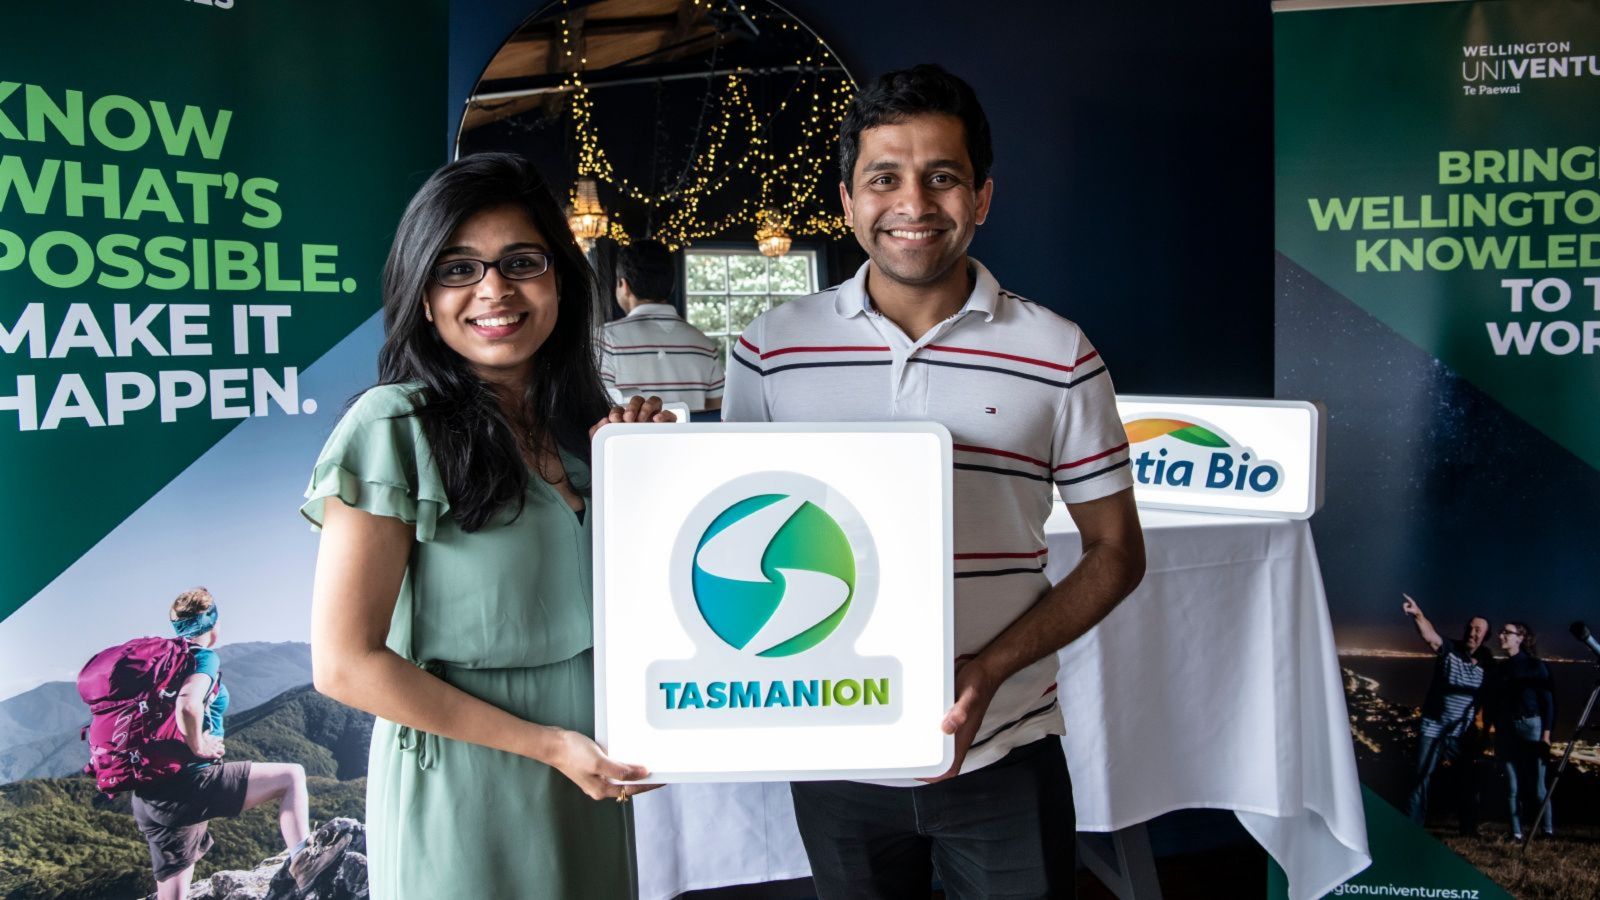 Tasmanion co-founder Dr Shalini Divya and Dr Ashwath Sundaresan, commercialisation manager at Wellington UniVentures